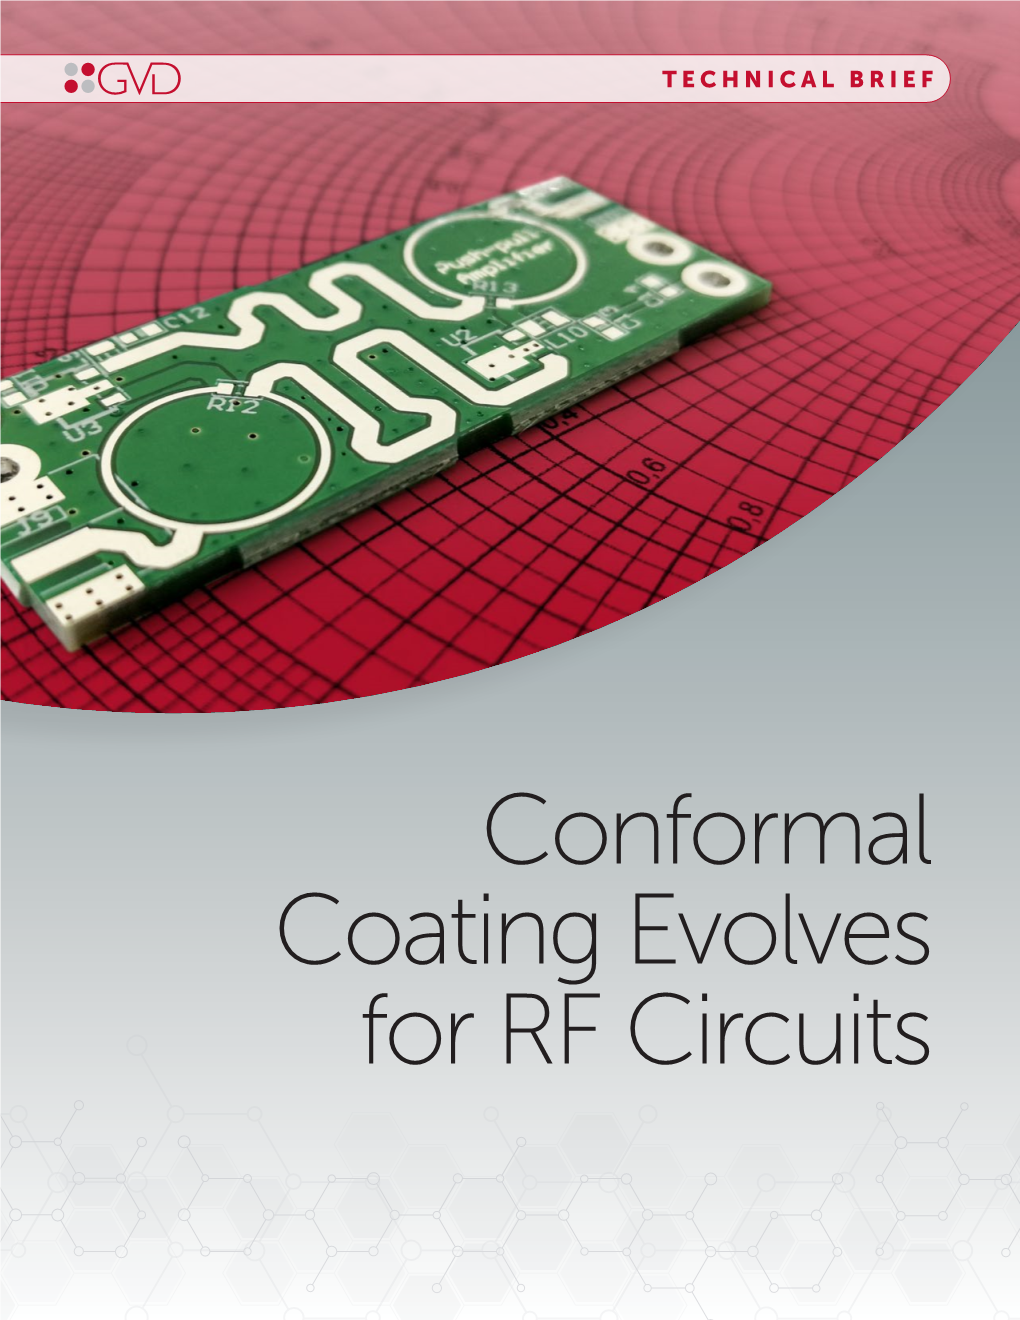 Conformal Coating Evolves for RF Circuits TECHNICAL BRIEF | Conformal Coating Evolves for RF Circuits